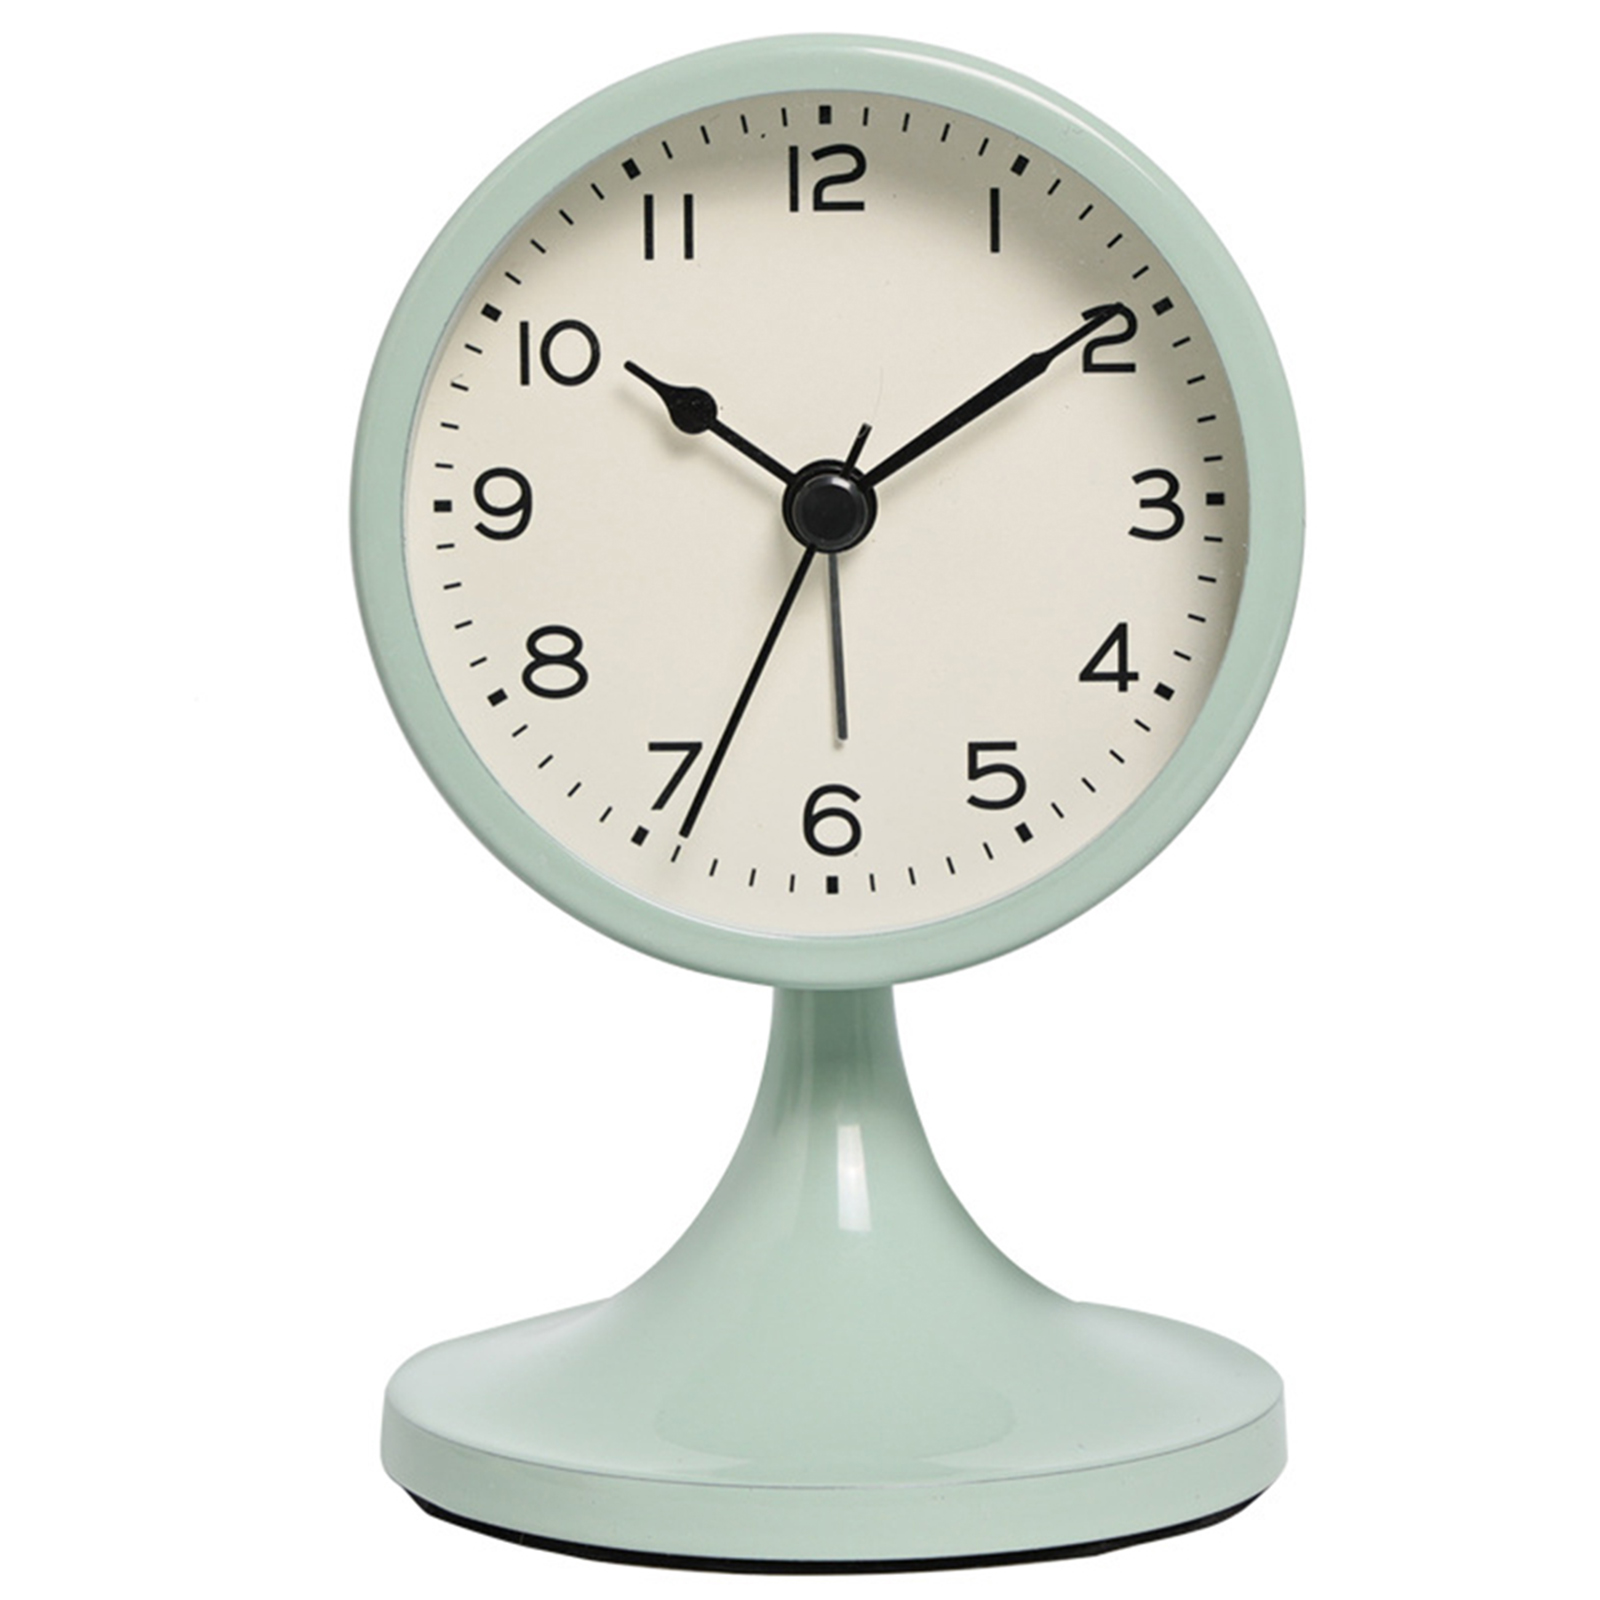 Vintage Alarm Clock High Precision Silent Bedside Night Light Loud Alarm Clock For Bedroom Home Office Decor